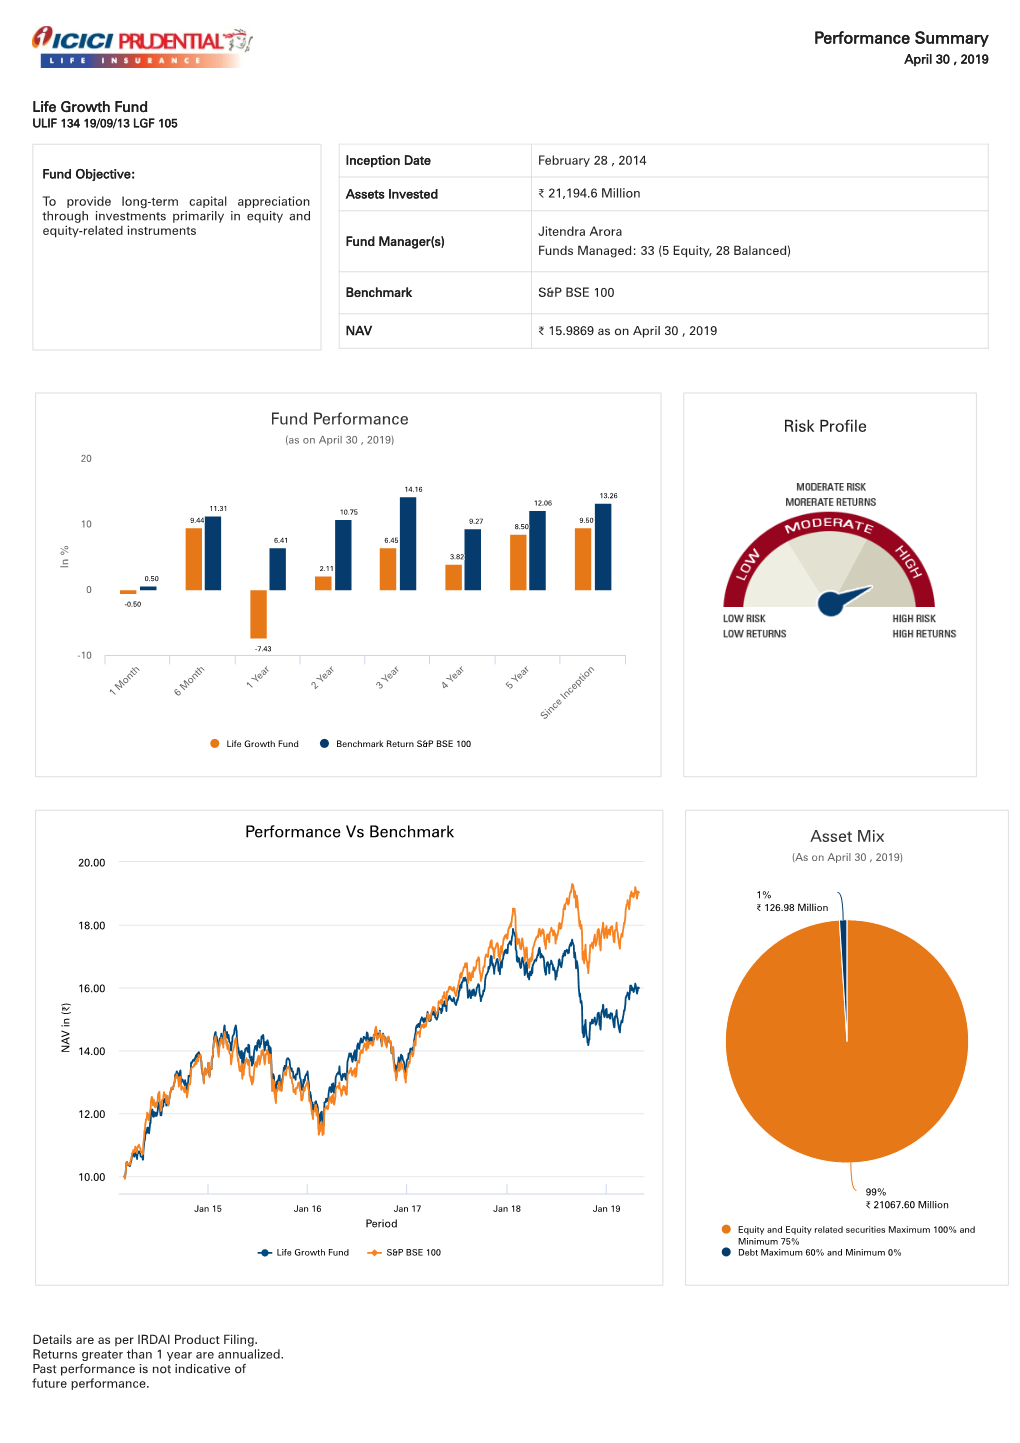 Performance Summary Fund Performance Risk Profile Performance Vs Benchmark Asset